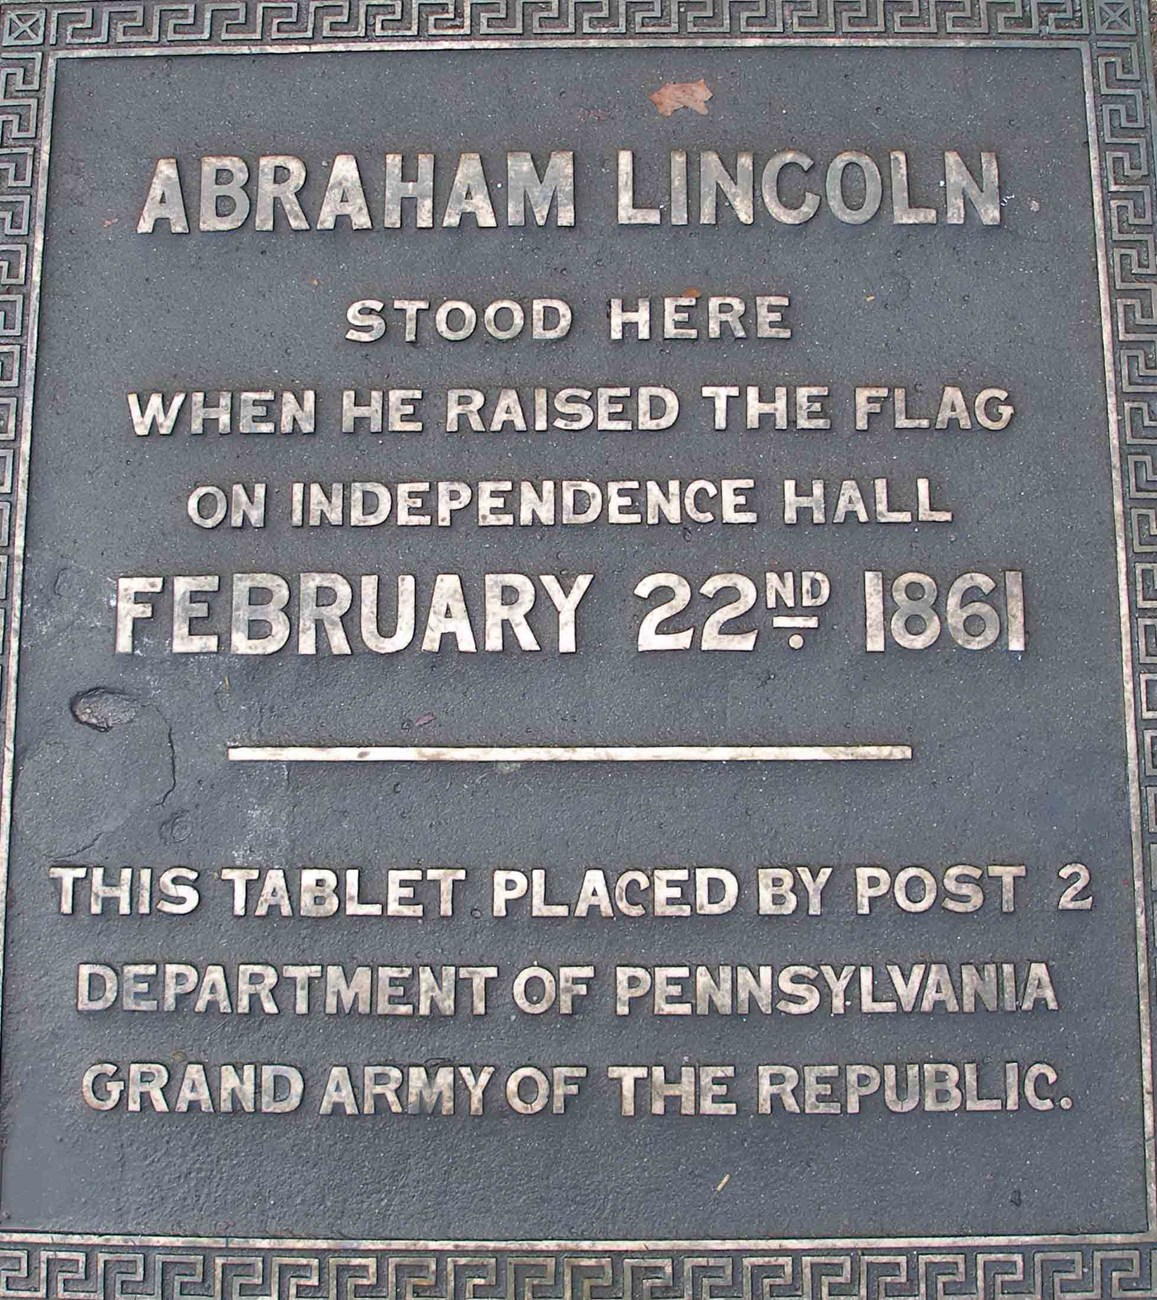 Dedication to Abraham Lincoln